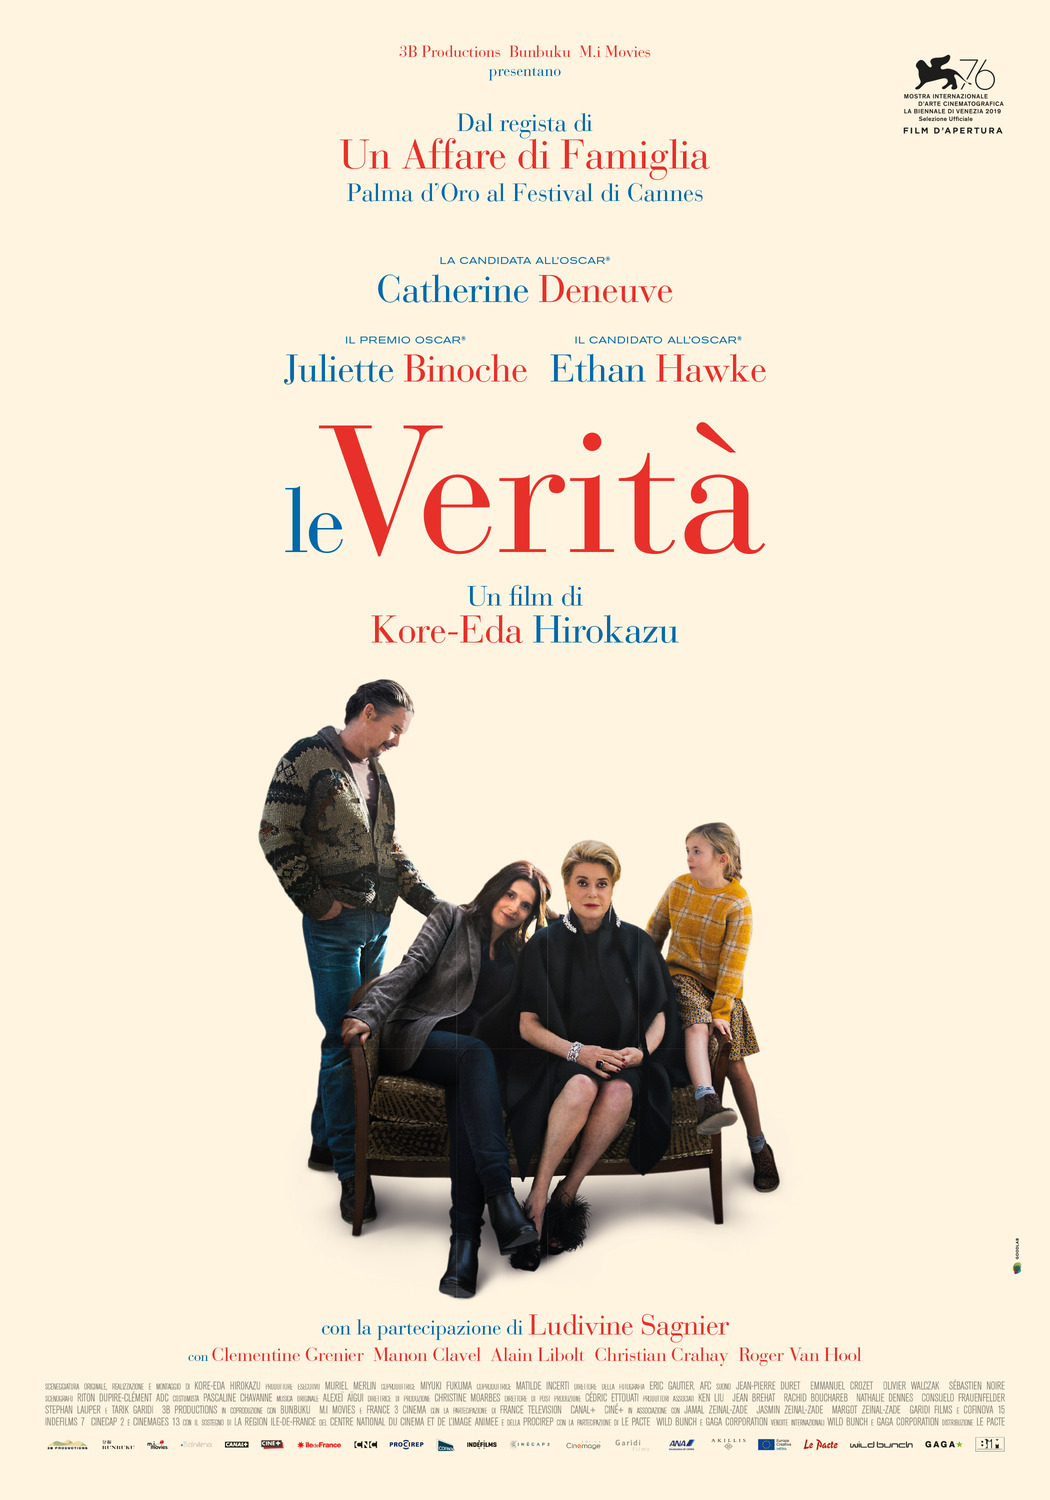 Extra Large Movie Poster Image for La vérité (#1 of 5)